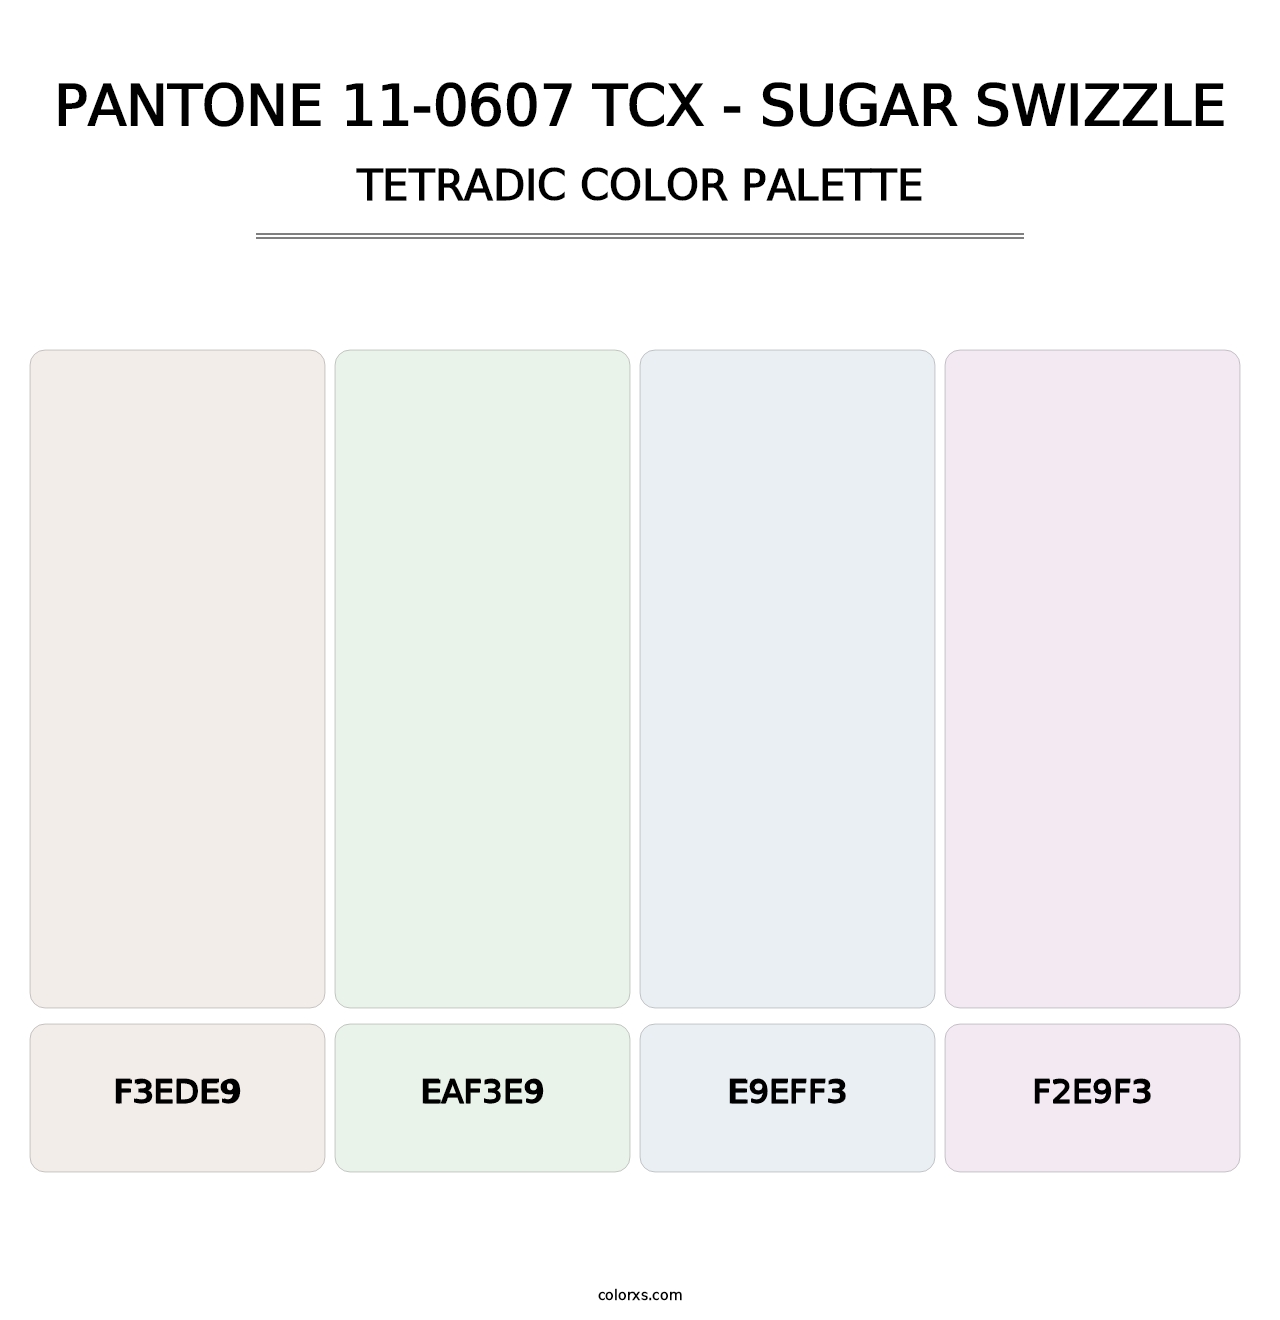 PANTONE 11-0607 TCX - Sugar Swizzle - Tetradic Color Palette